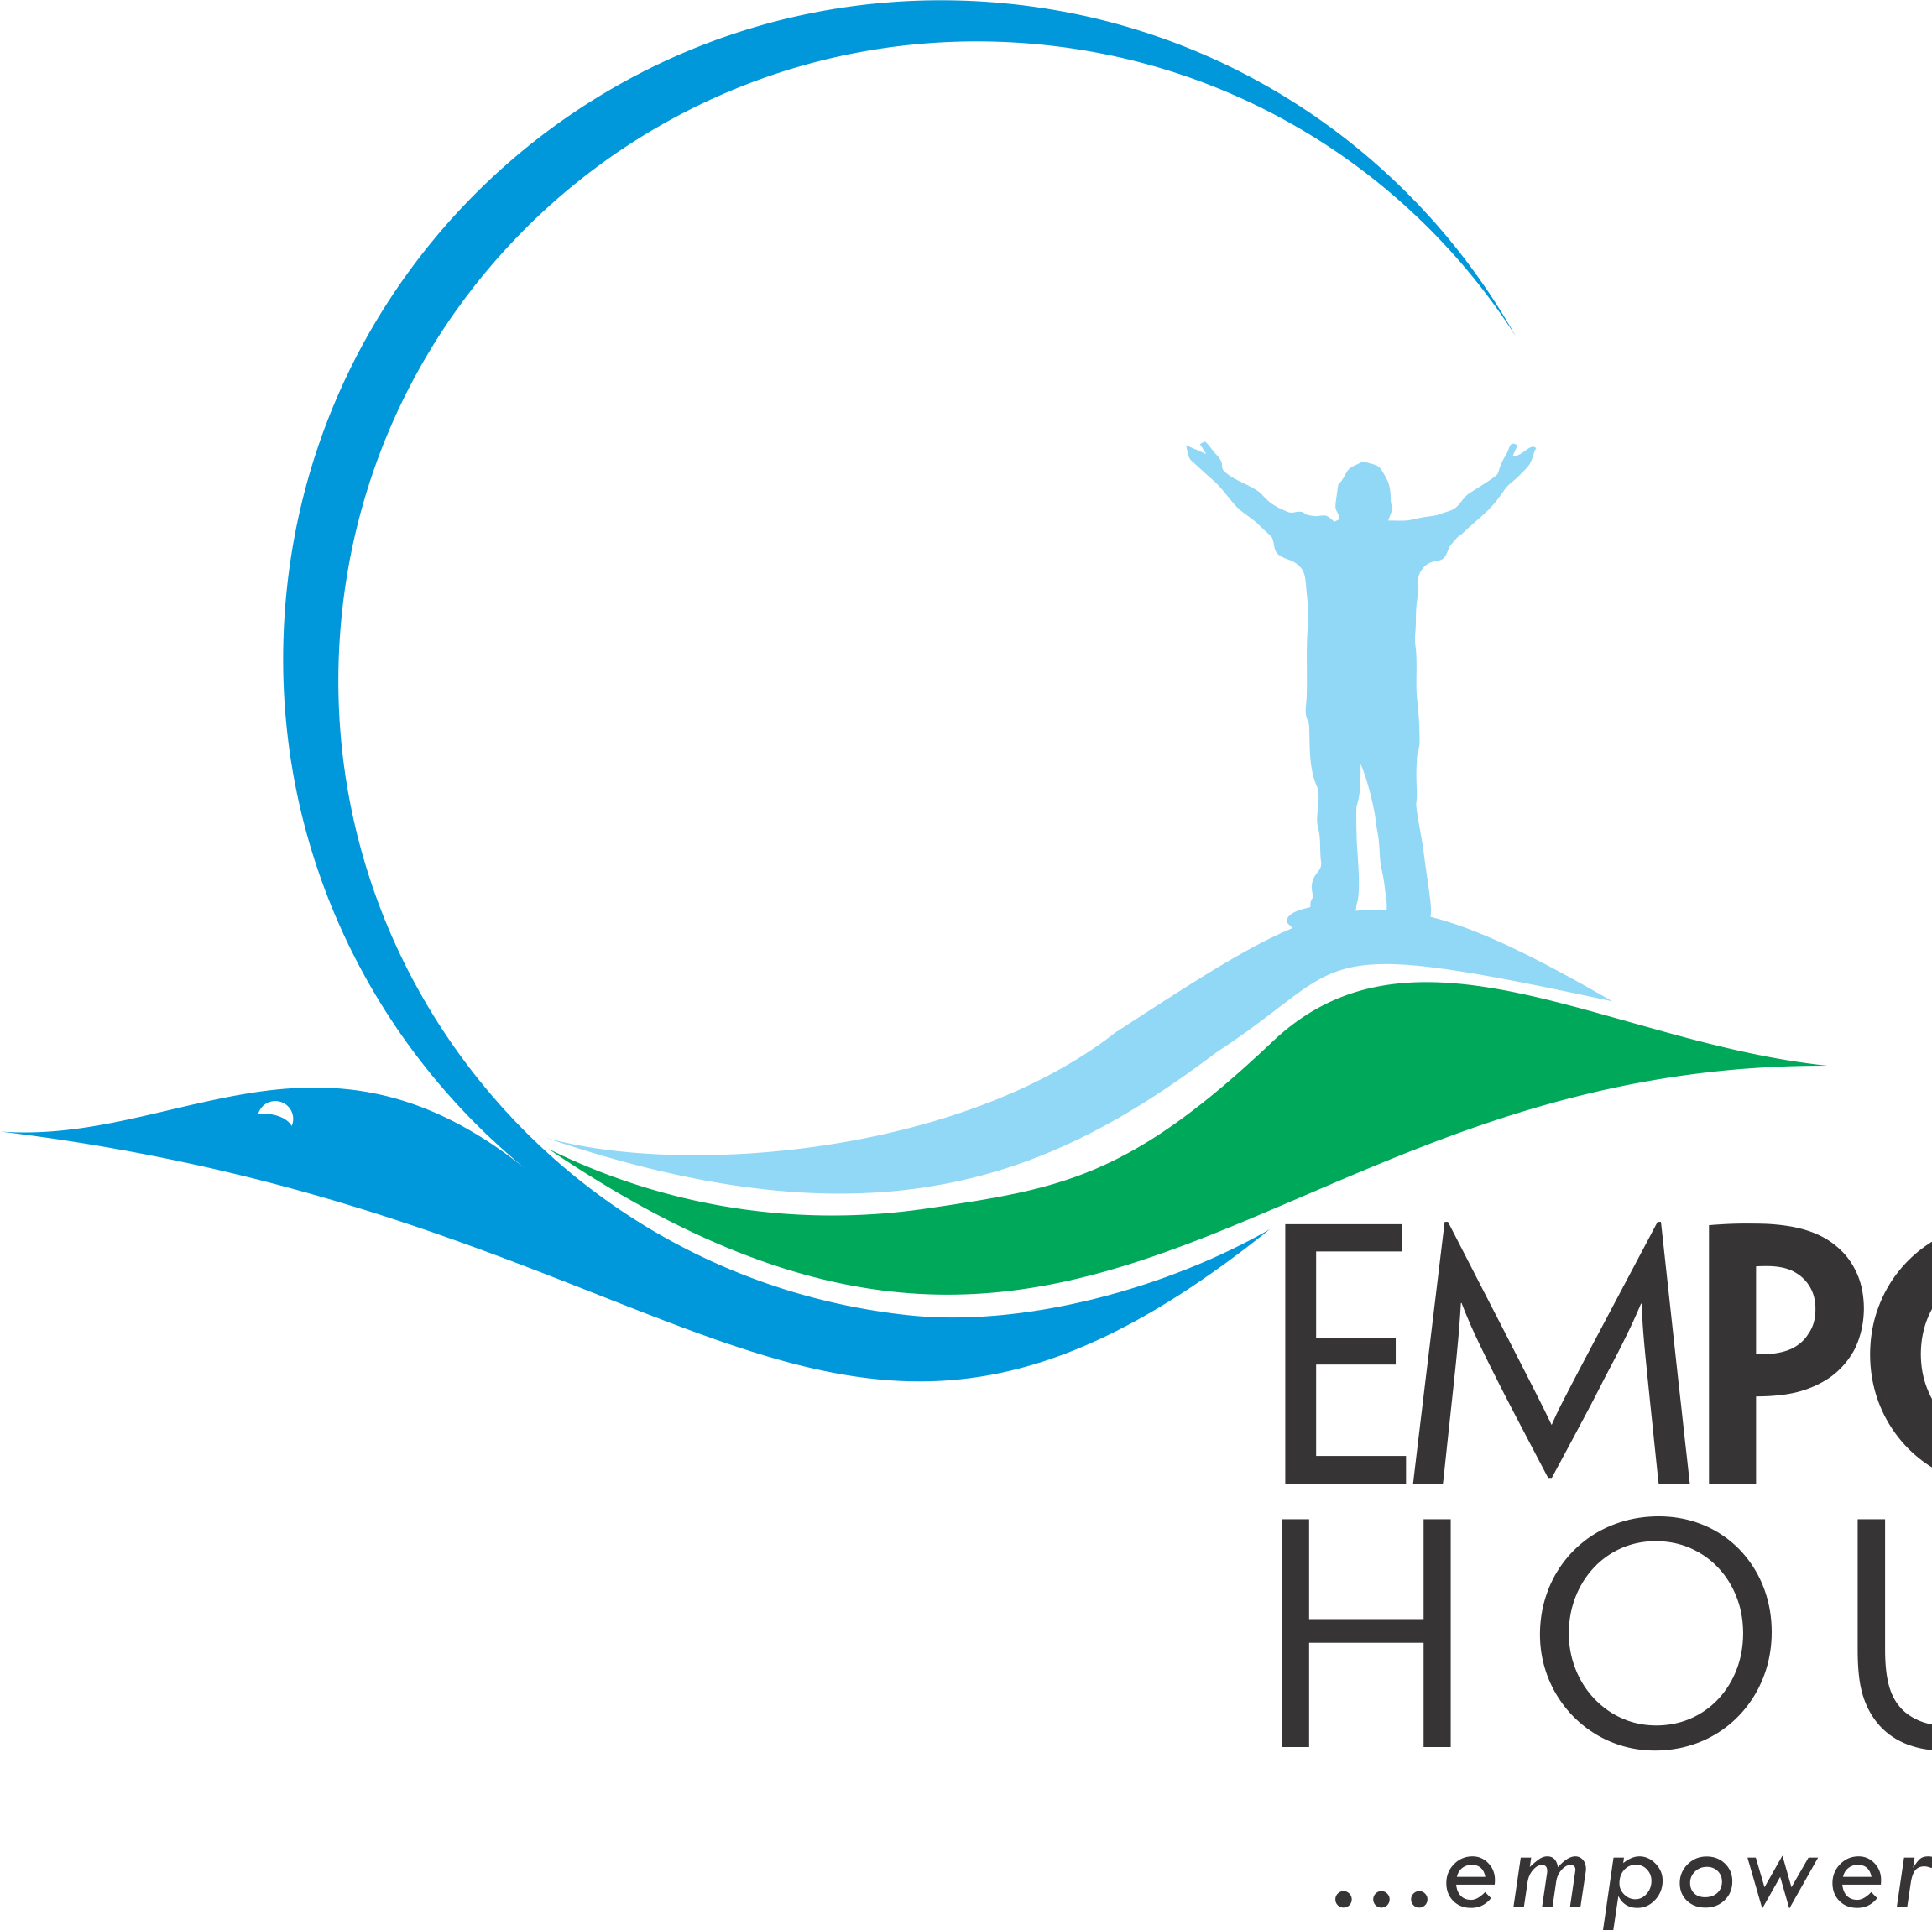 Empowerment House - Empowerment House (2302x2300)